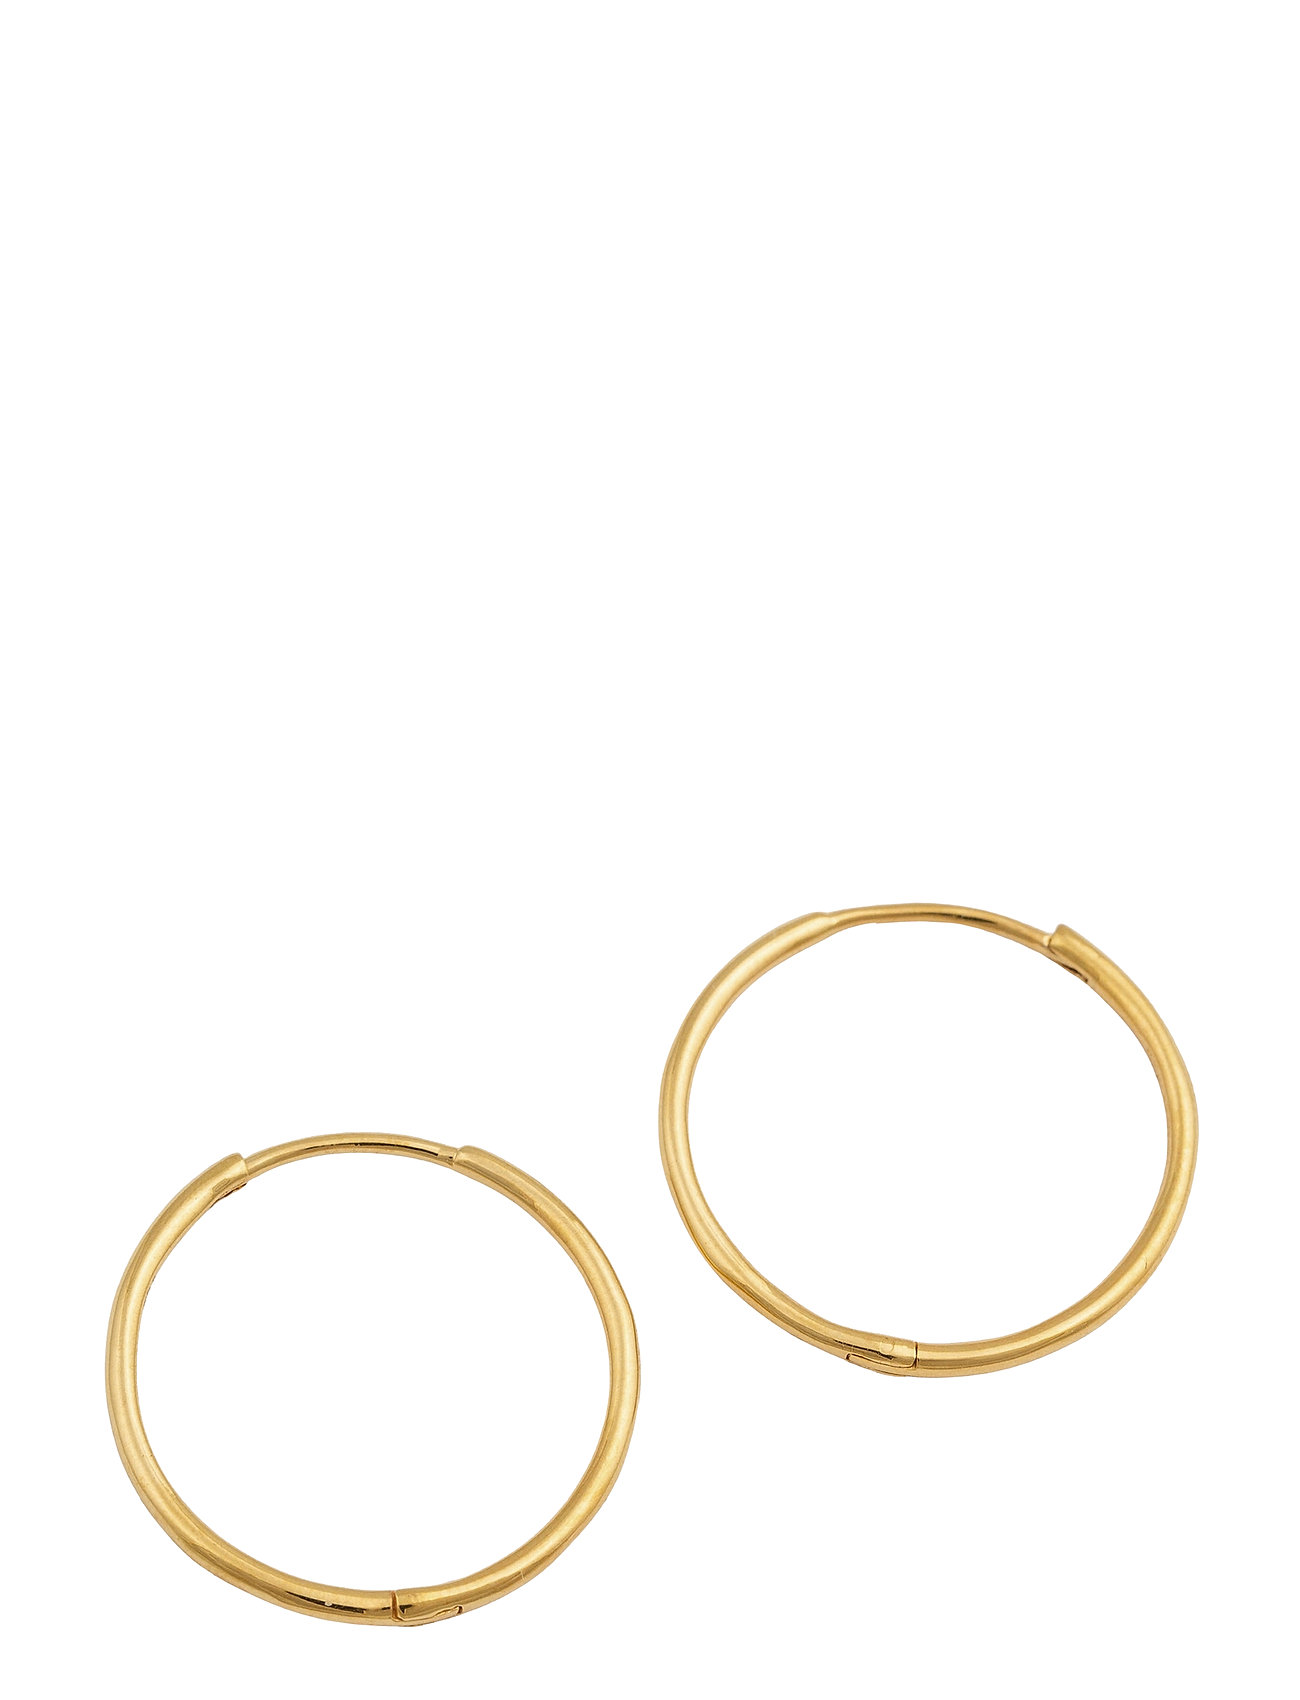 Beloved Medium Hoops Gold Accessories Jewellery Earrings Hoops Gold Syster P